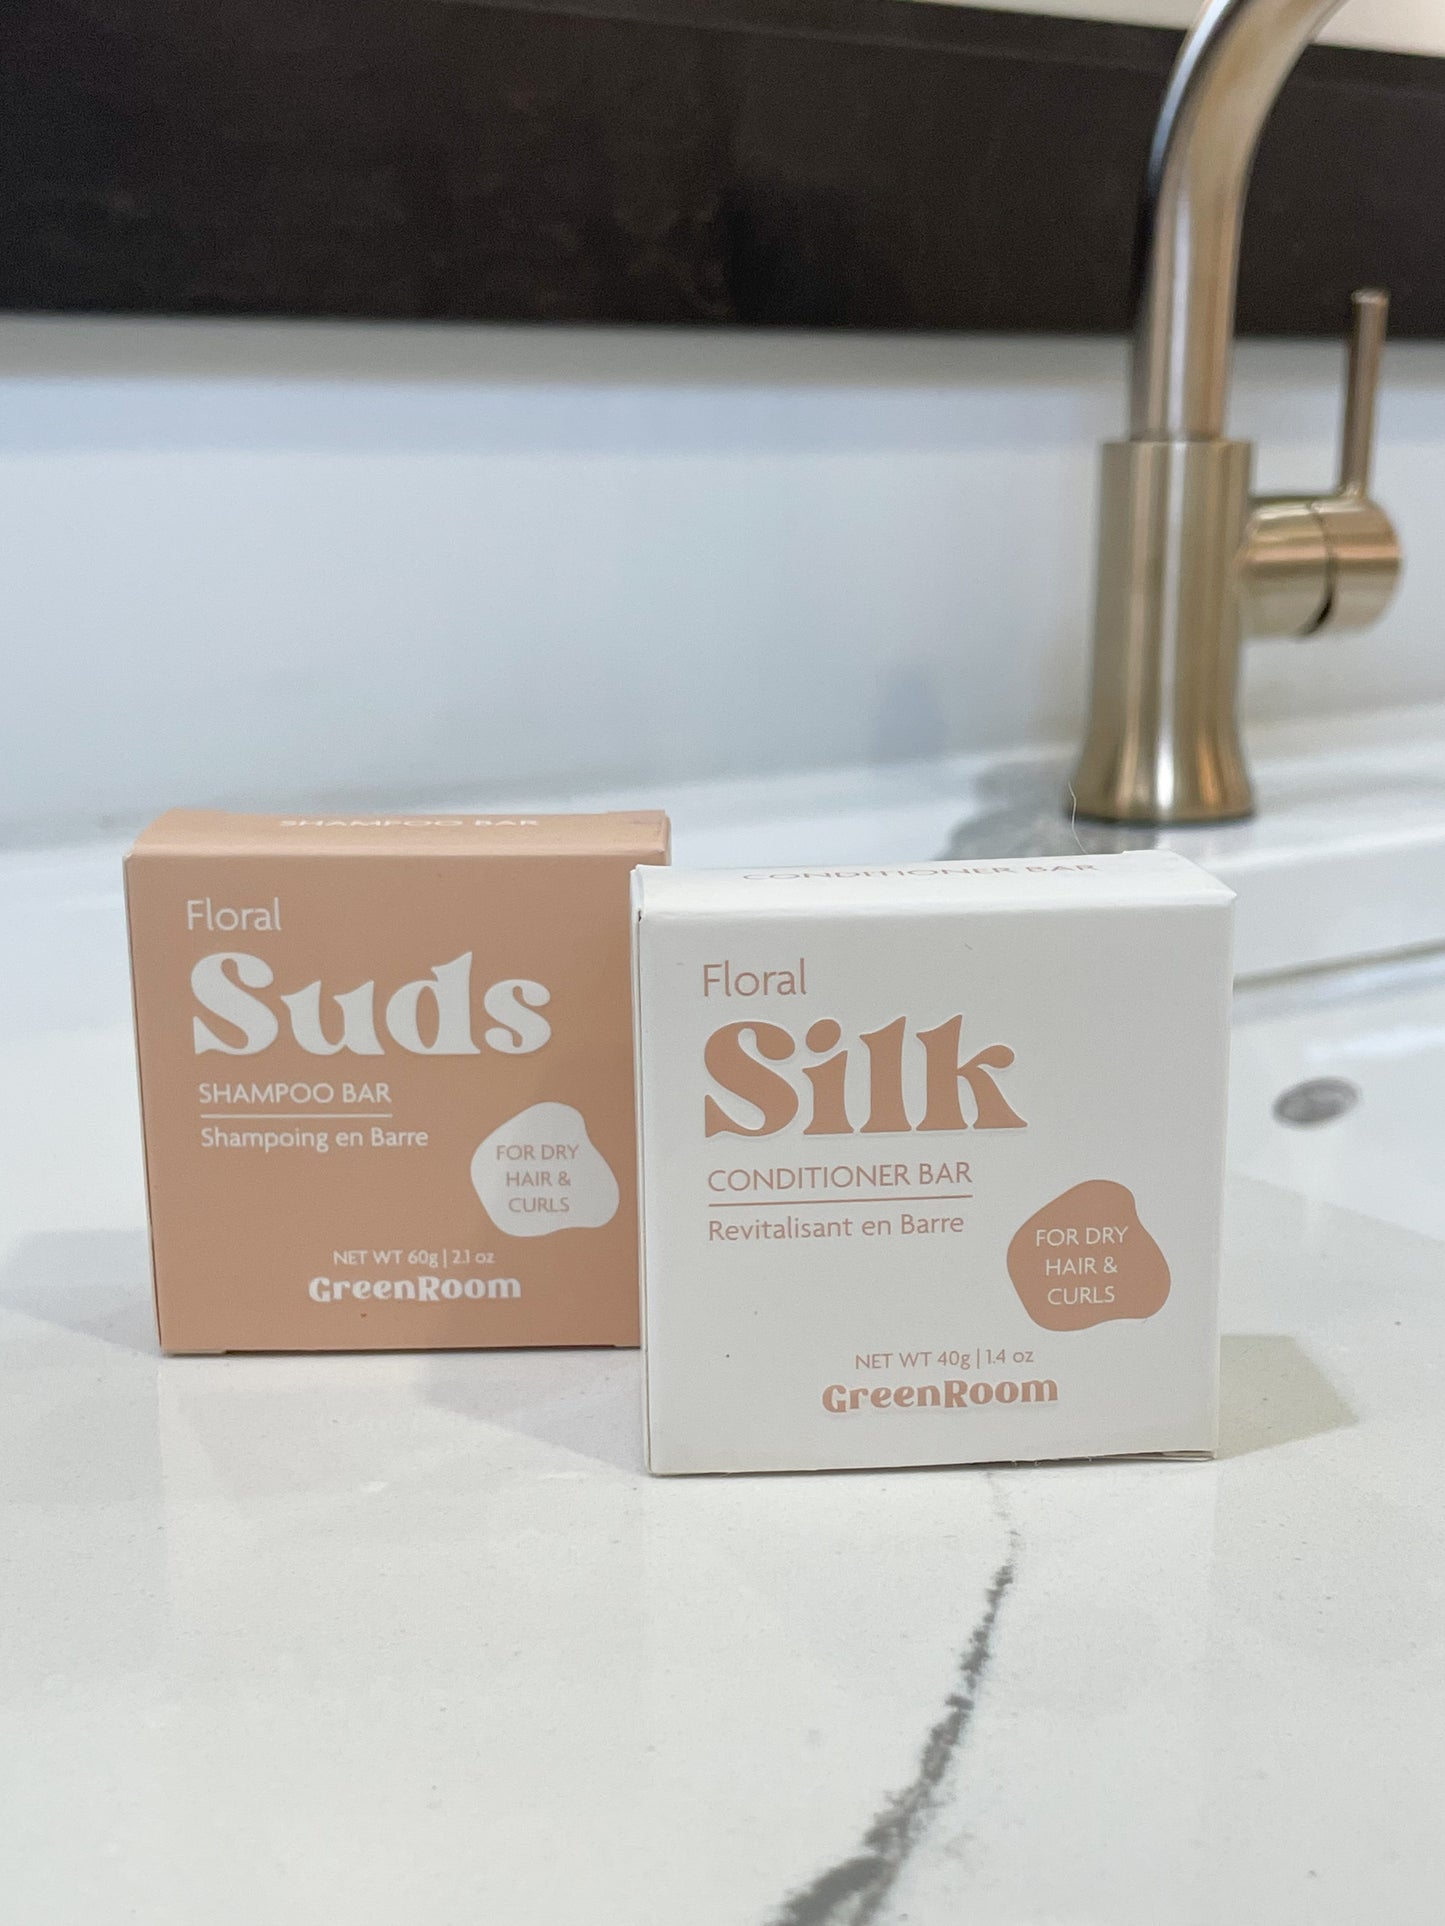 Suds Shampoo Bar - FLORAL